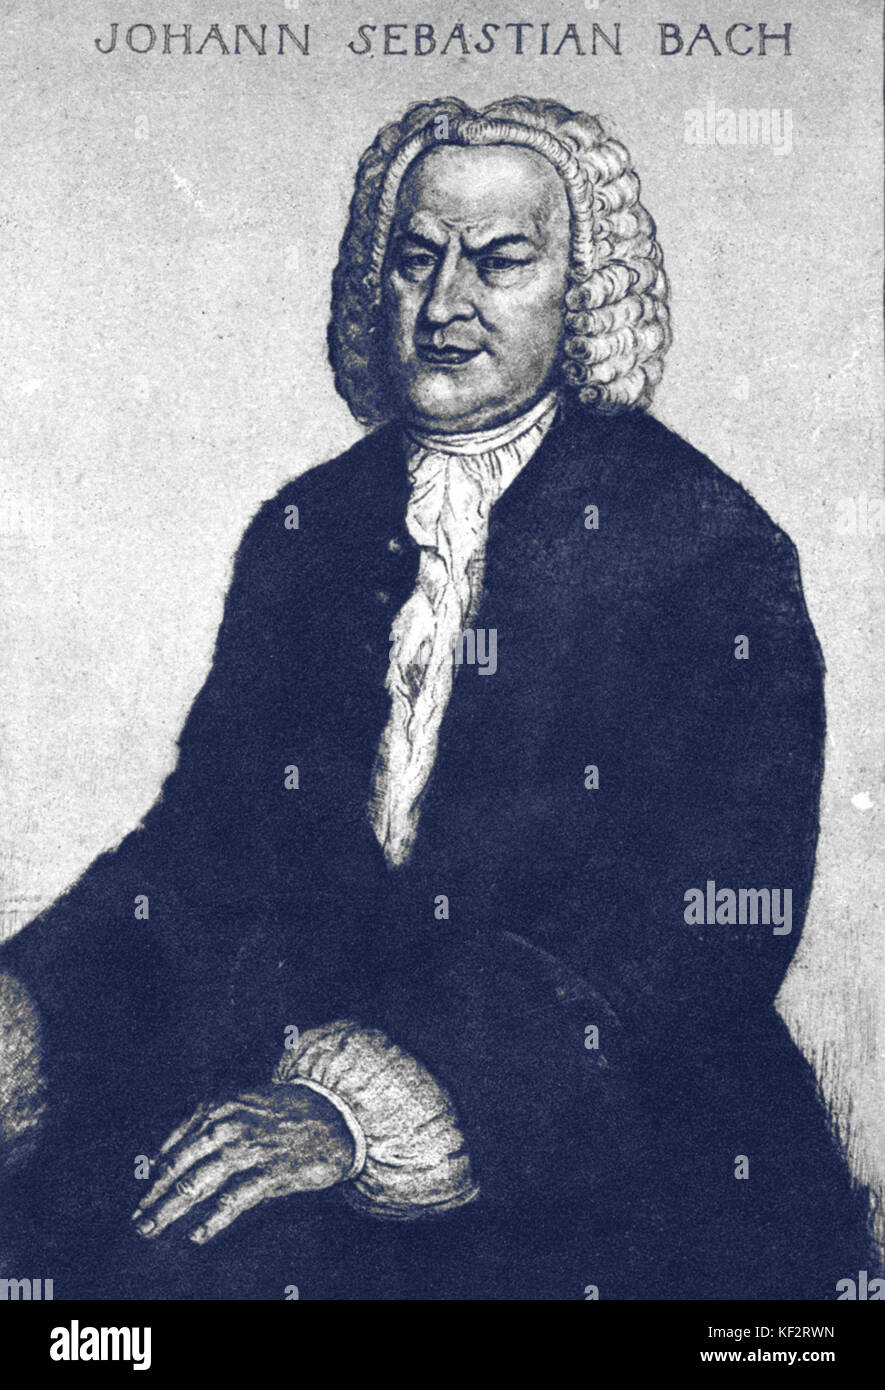 Johann Sebastian Bach- portrait. German composer & organist 1685-1750. Stock Photo